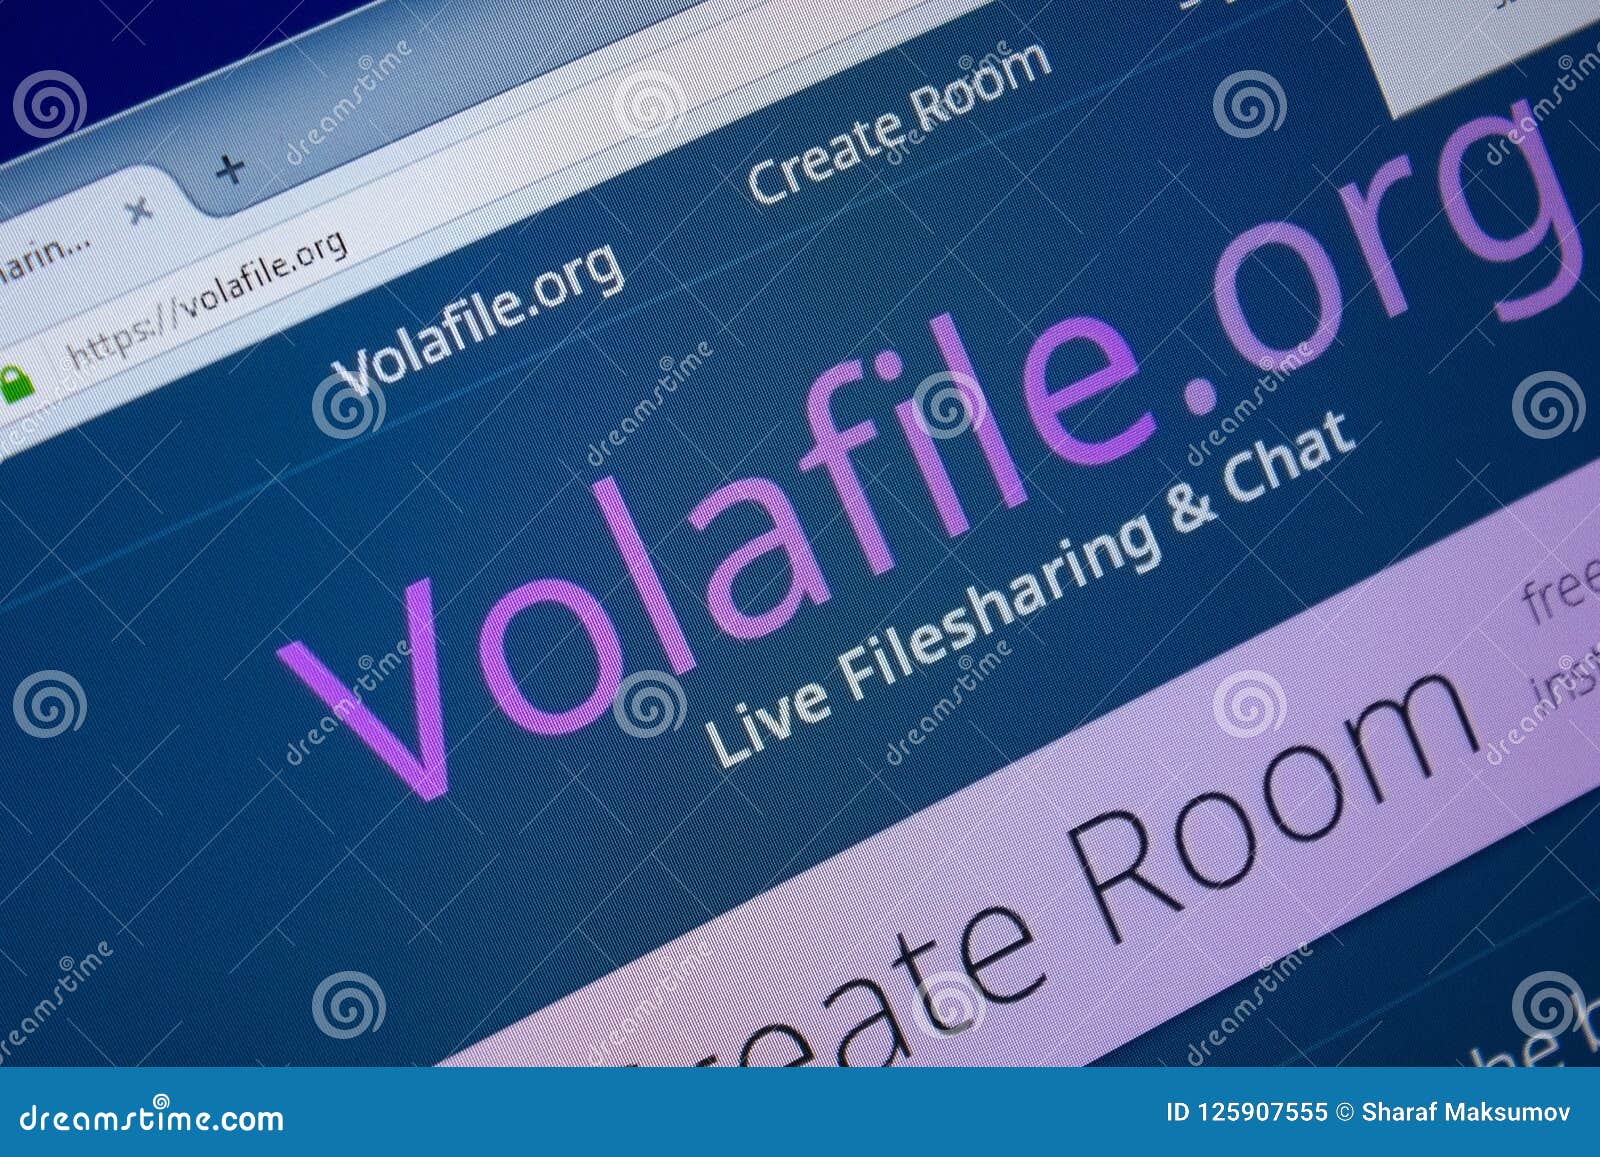 Room vola Volafile downloader